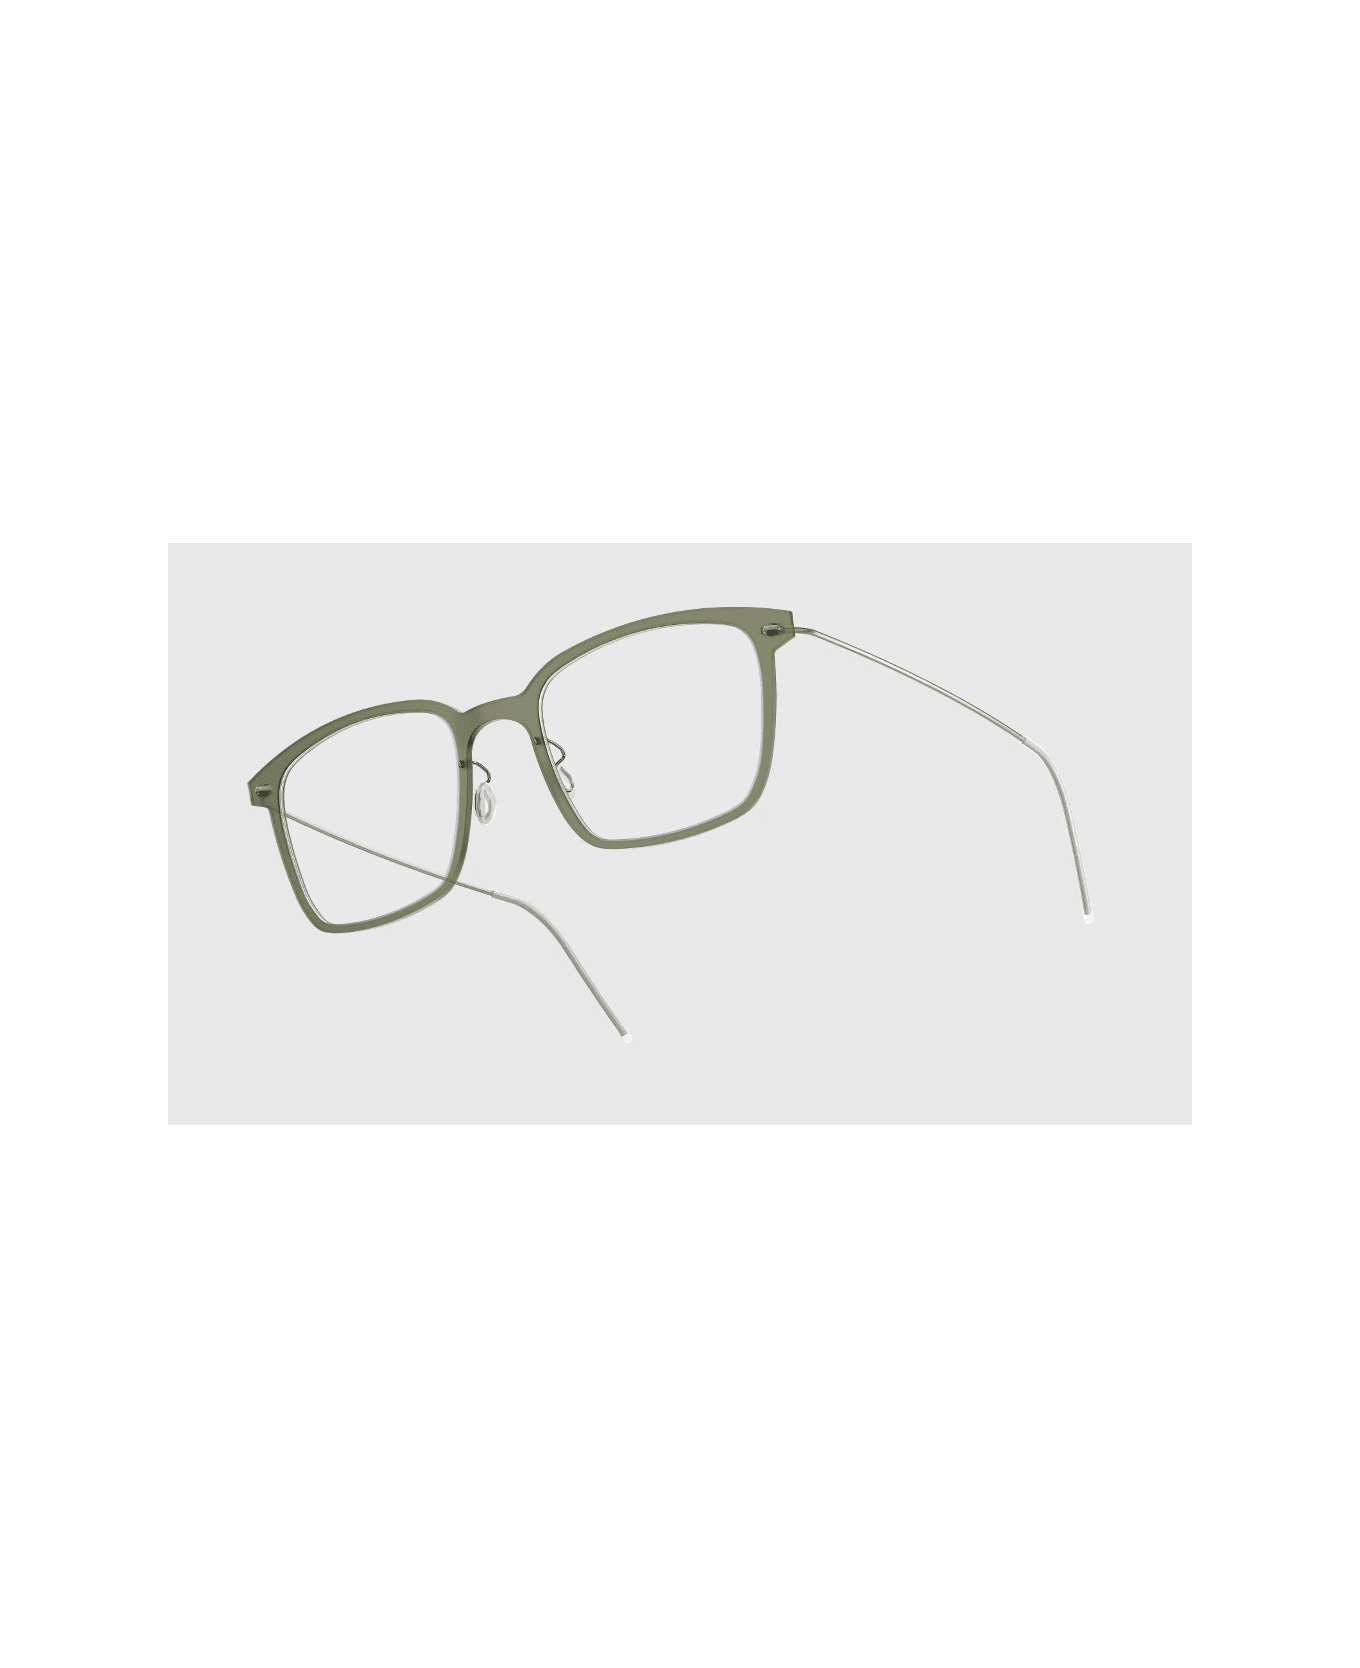 LINDBERG Now 6522 C11M Glasses